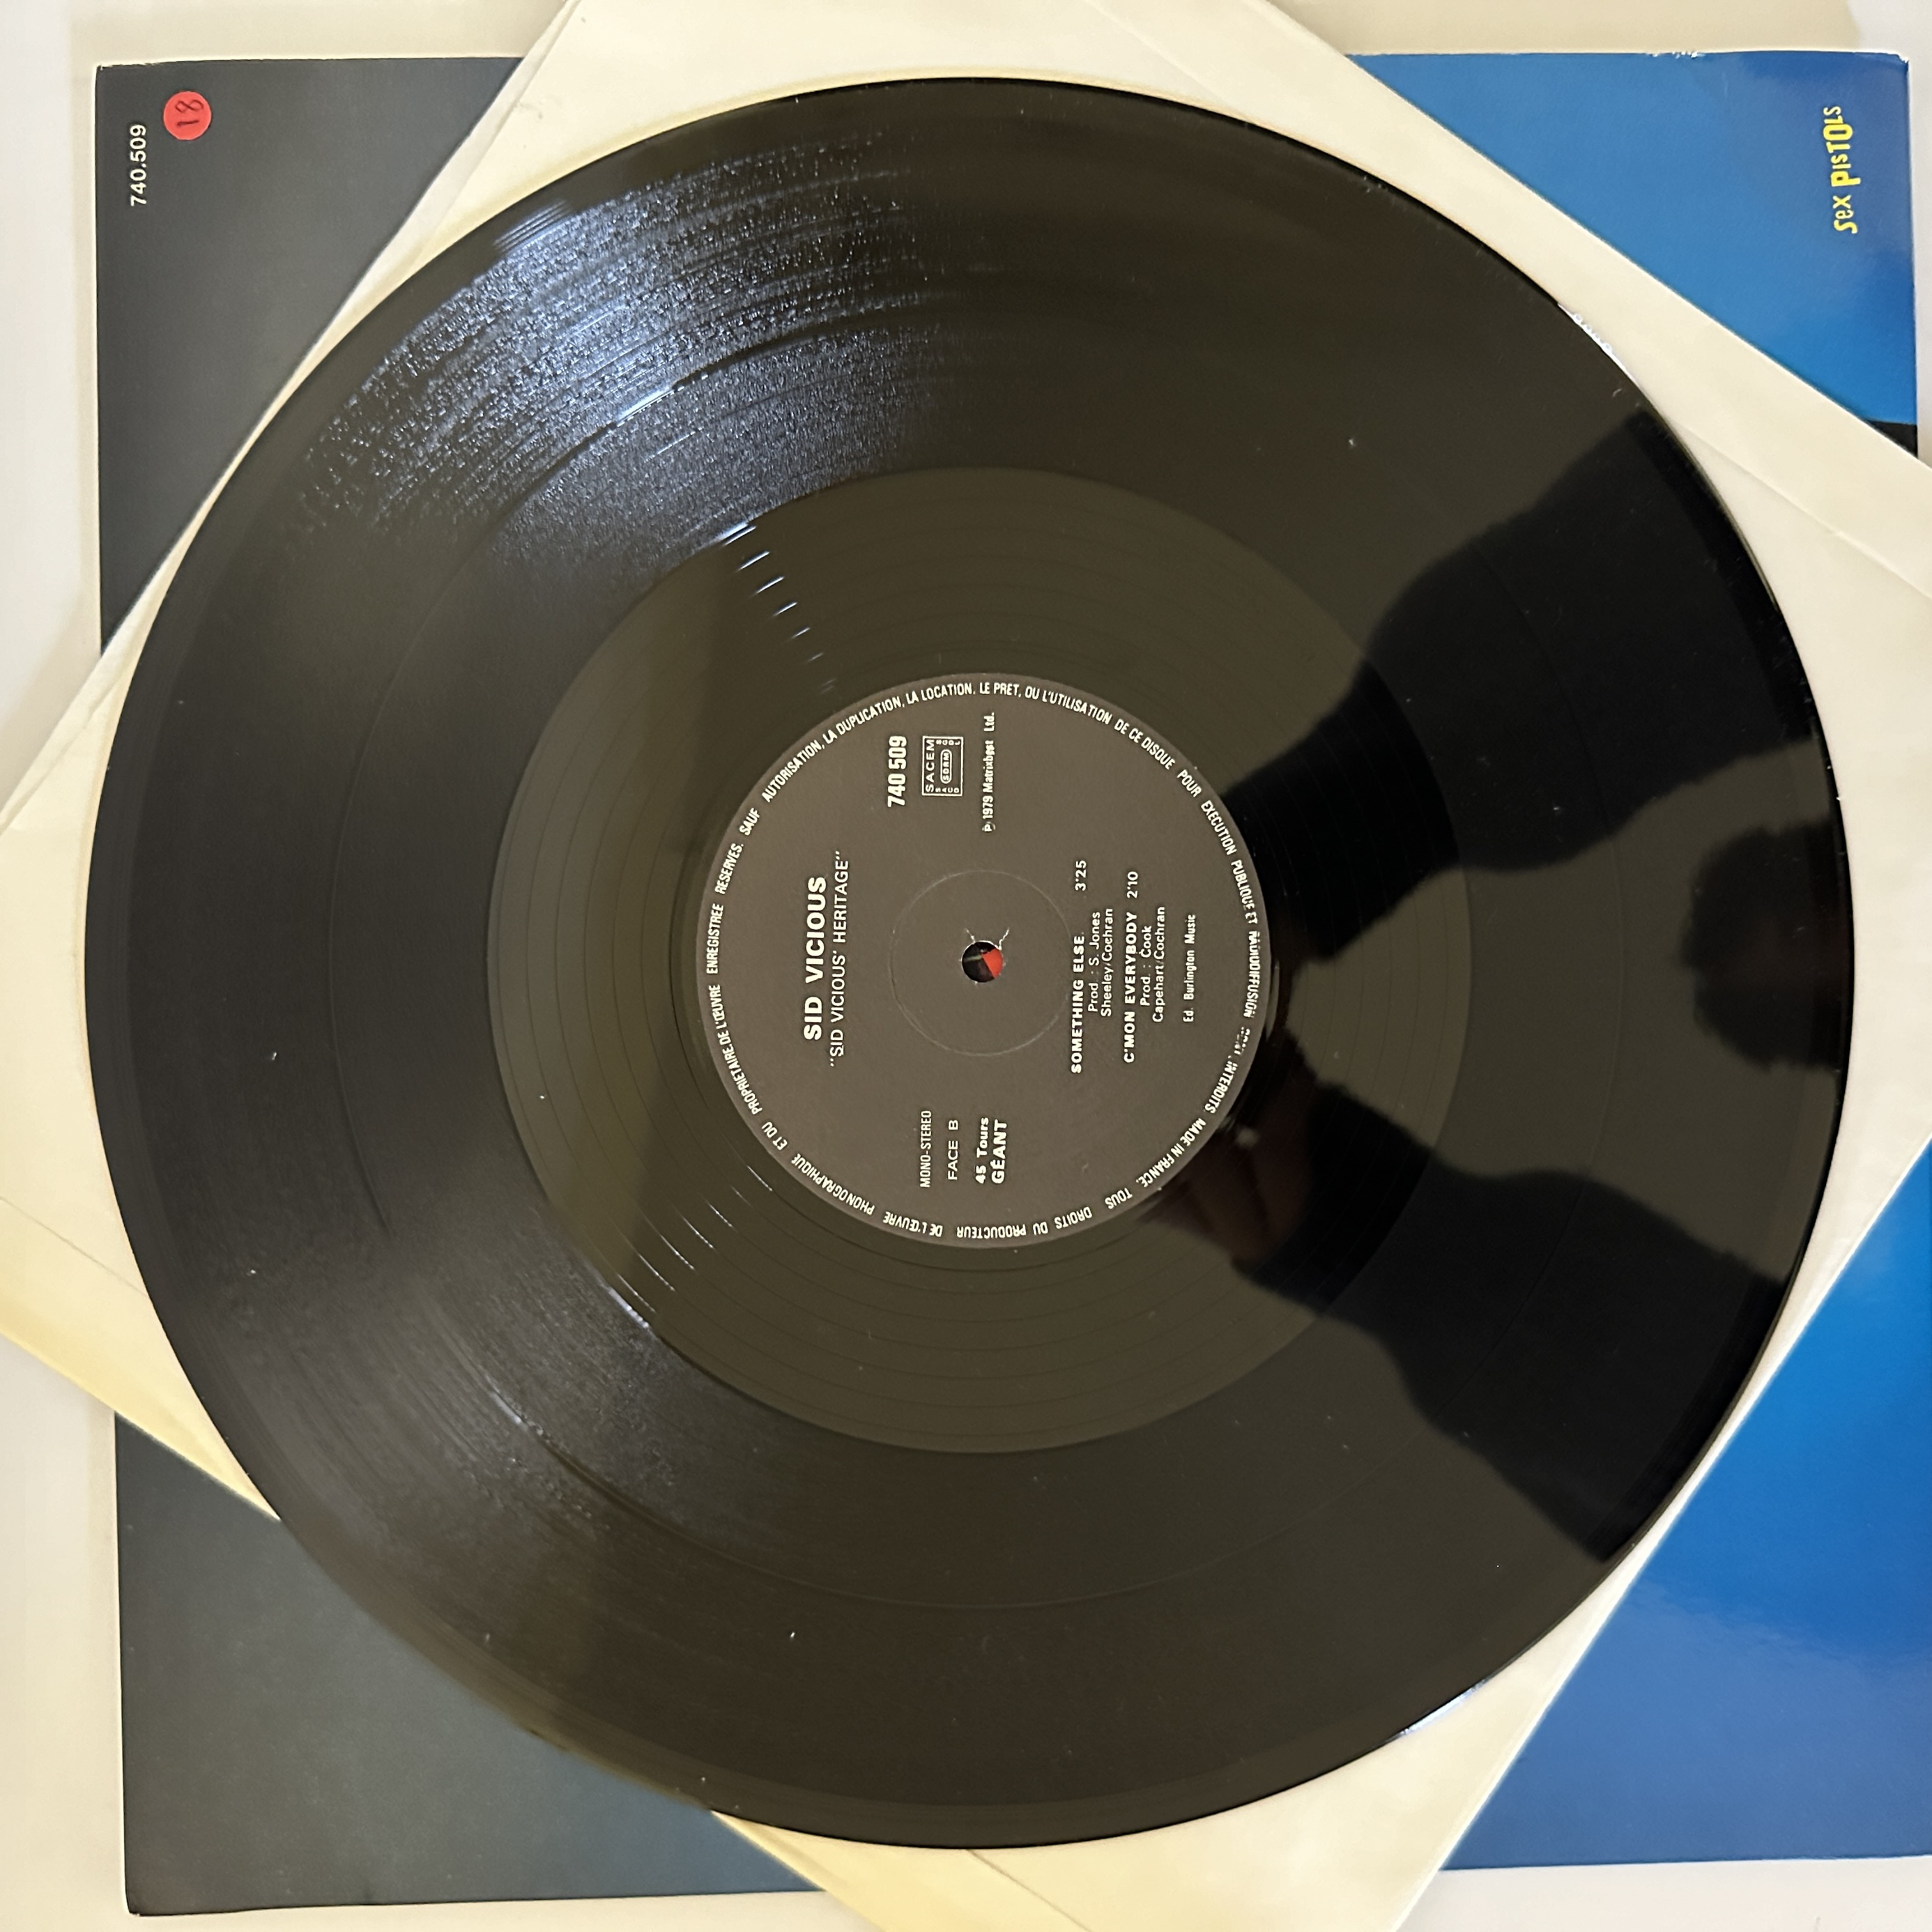 Sid Vicious - C'mon Everybody vinyl LP - Image 7 of 8